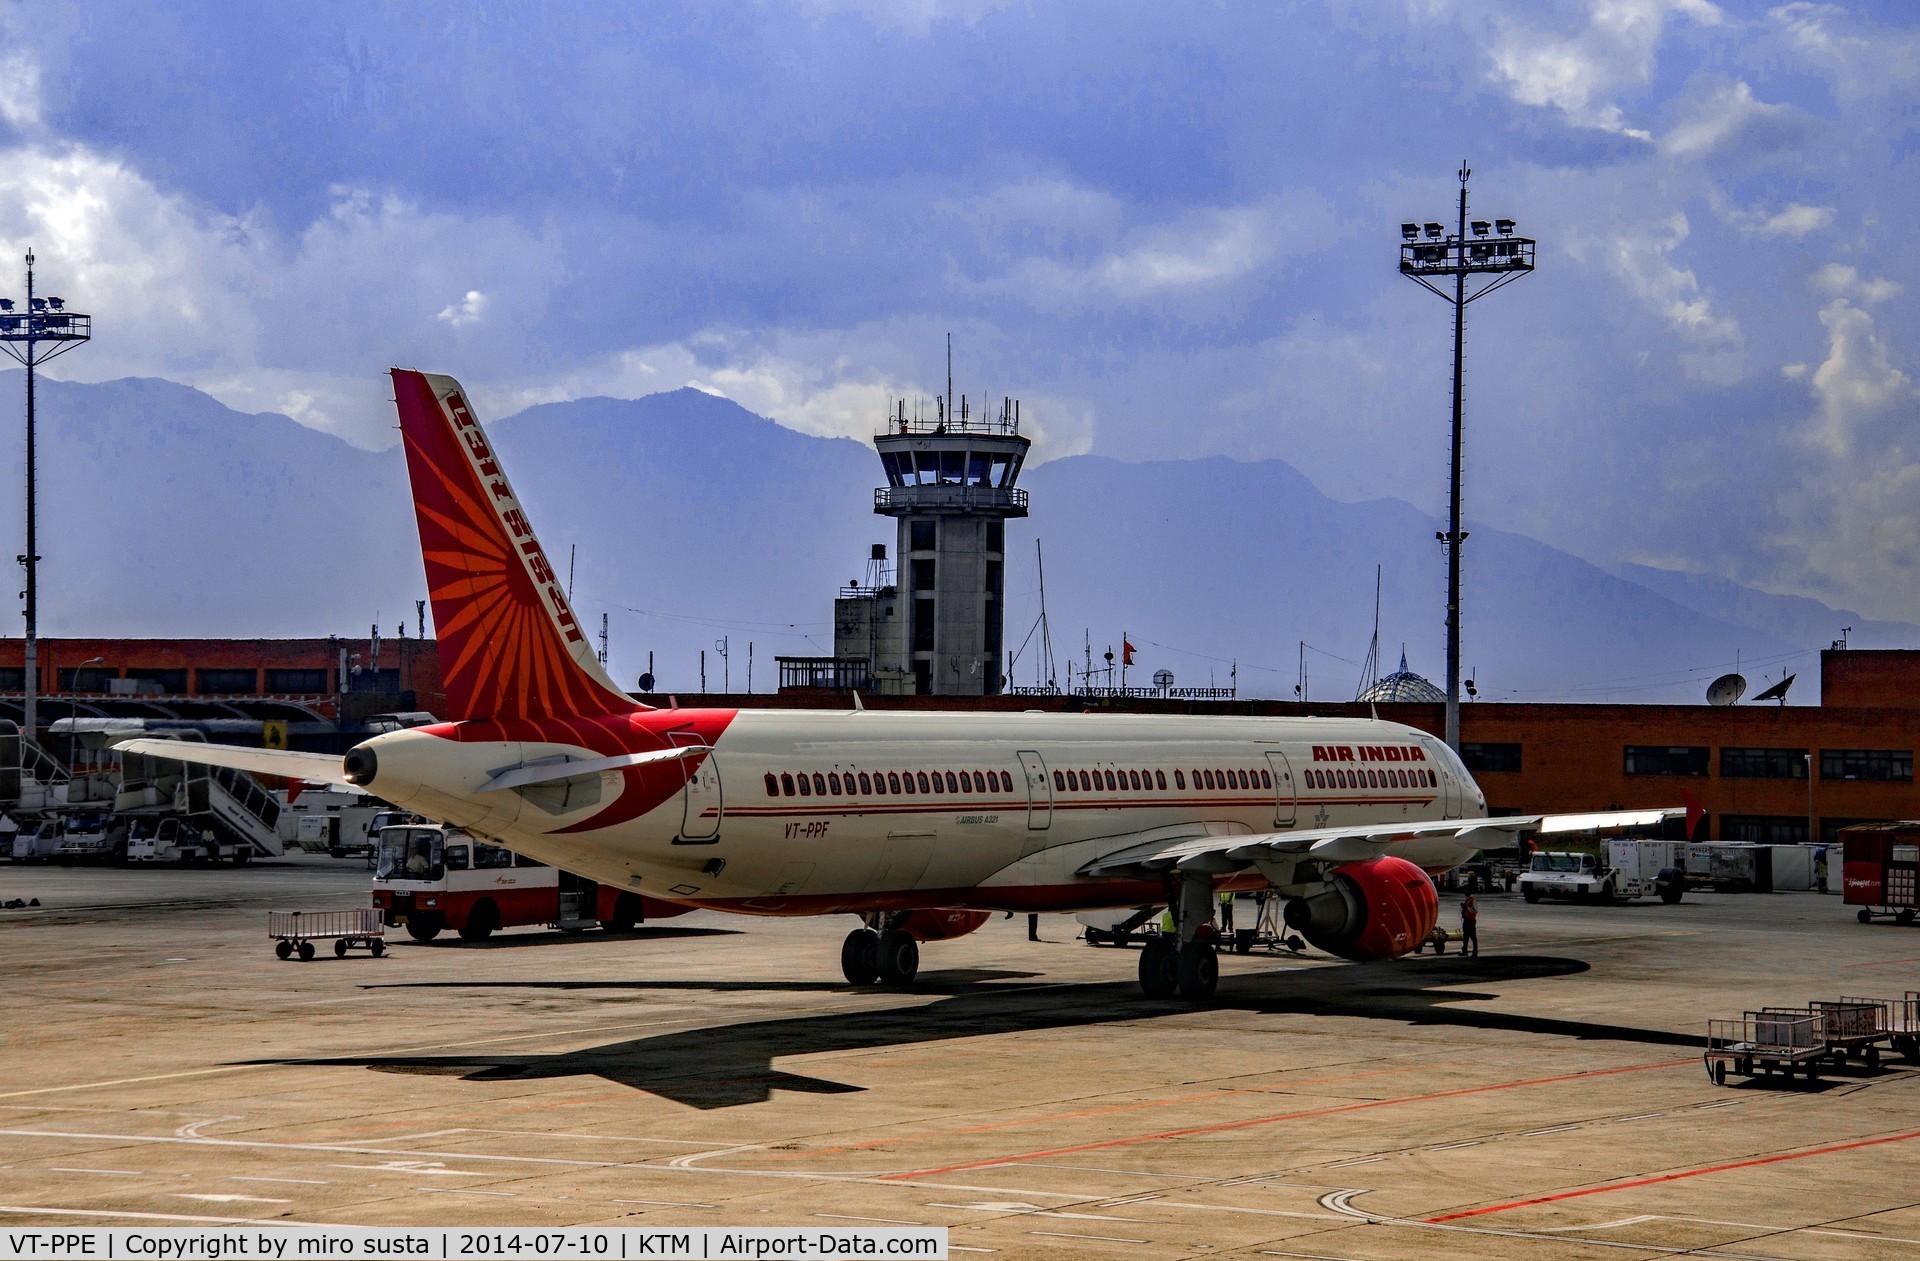 VT-PPE, 2007 Airbus A321-211 C/N 3326, Air India Airbus A 321-211 Airplane docked at Kathmandu International Airport.